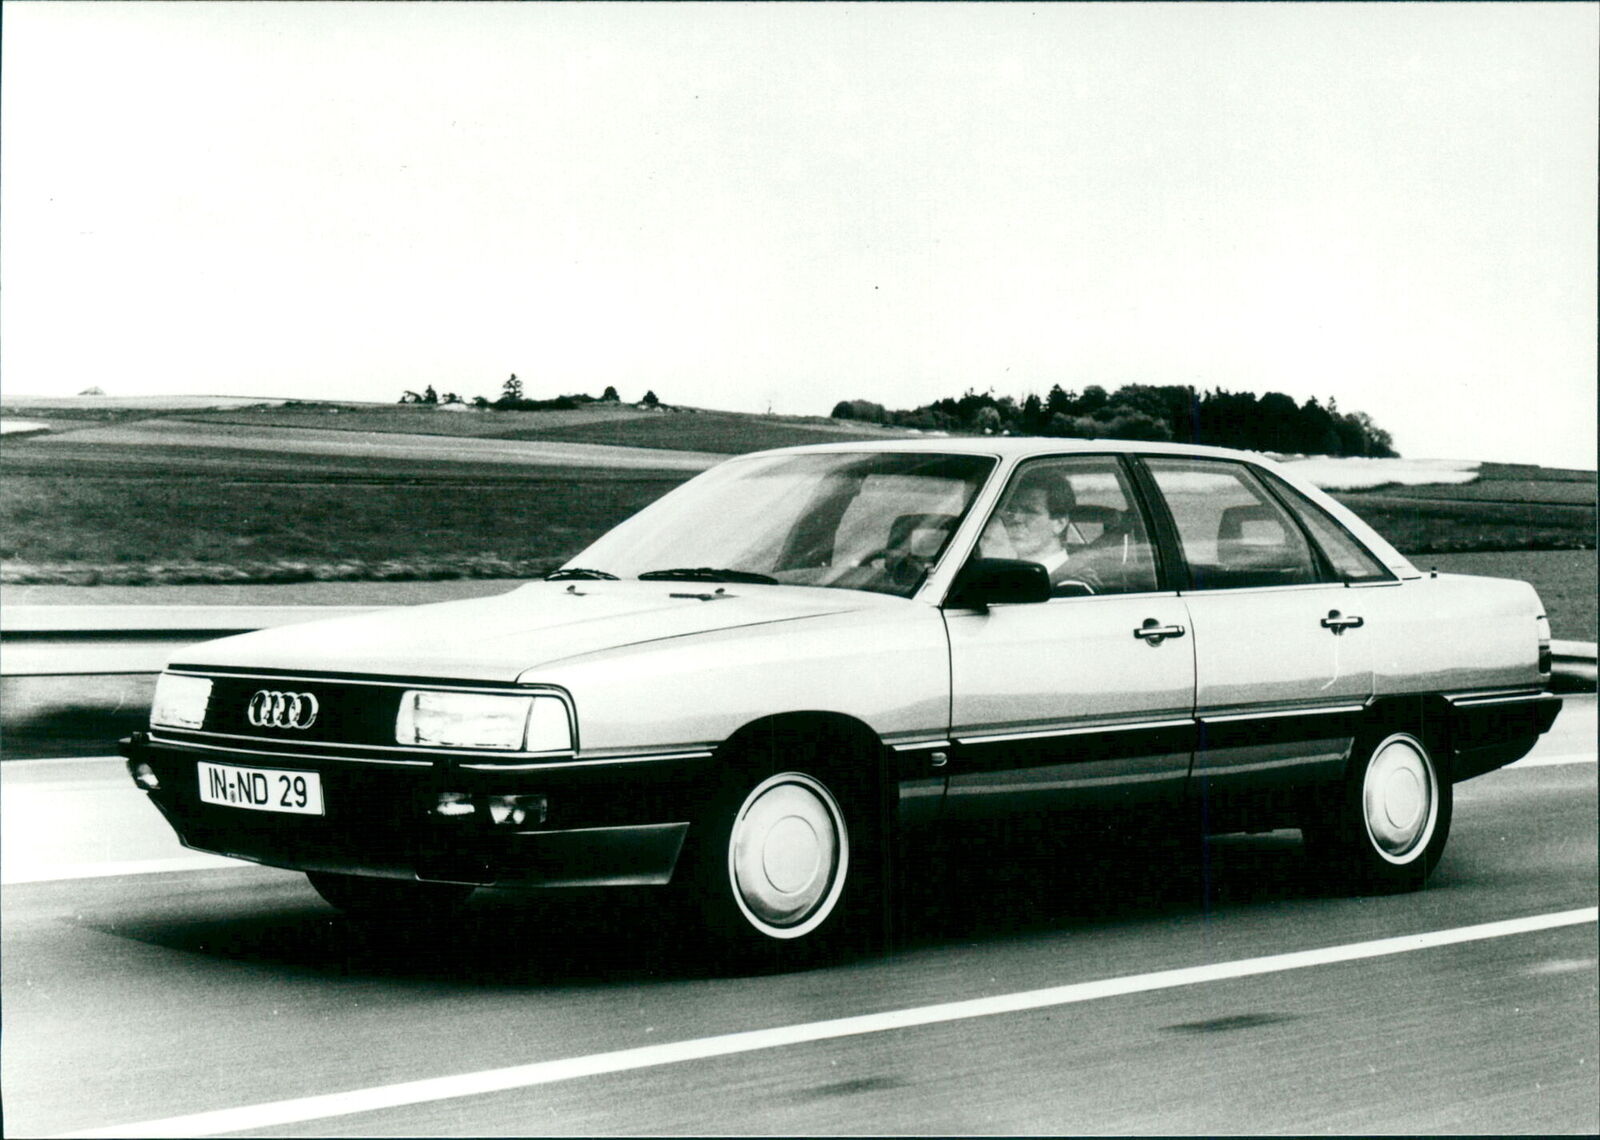 Audi 200 turbo - Vintage Photograph 2421073